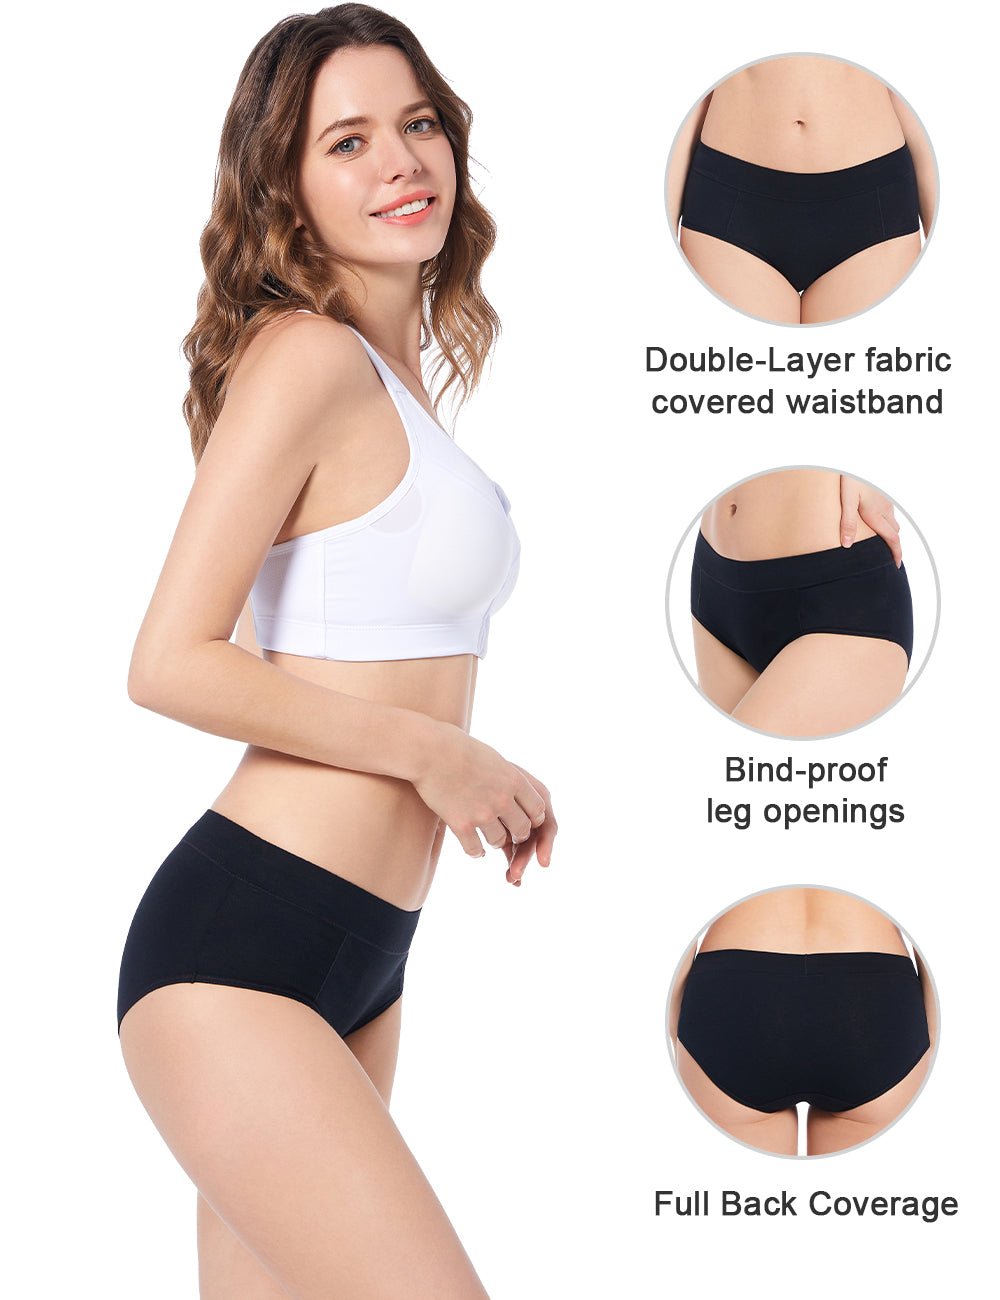 Molasus Women's Cotton Underwear High Waisted Full Coverage Ladies Panties  (Regular & Plus Size)